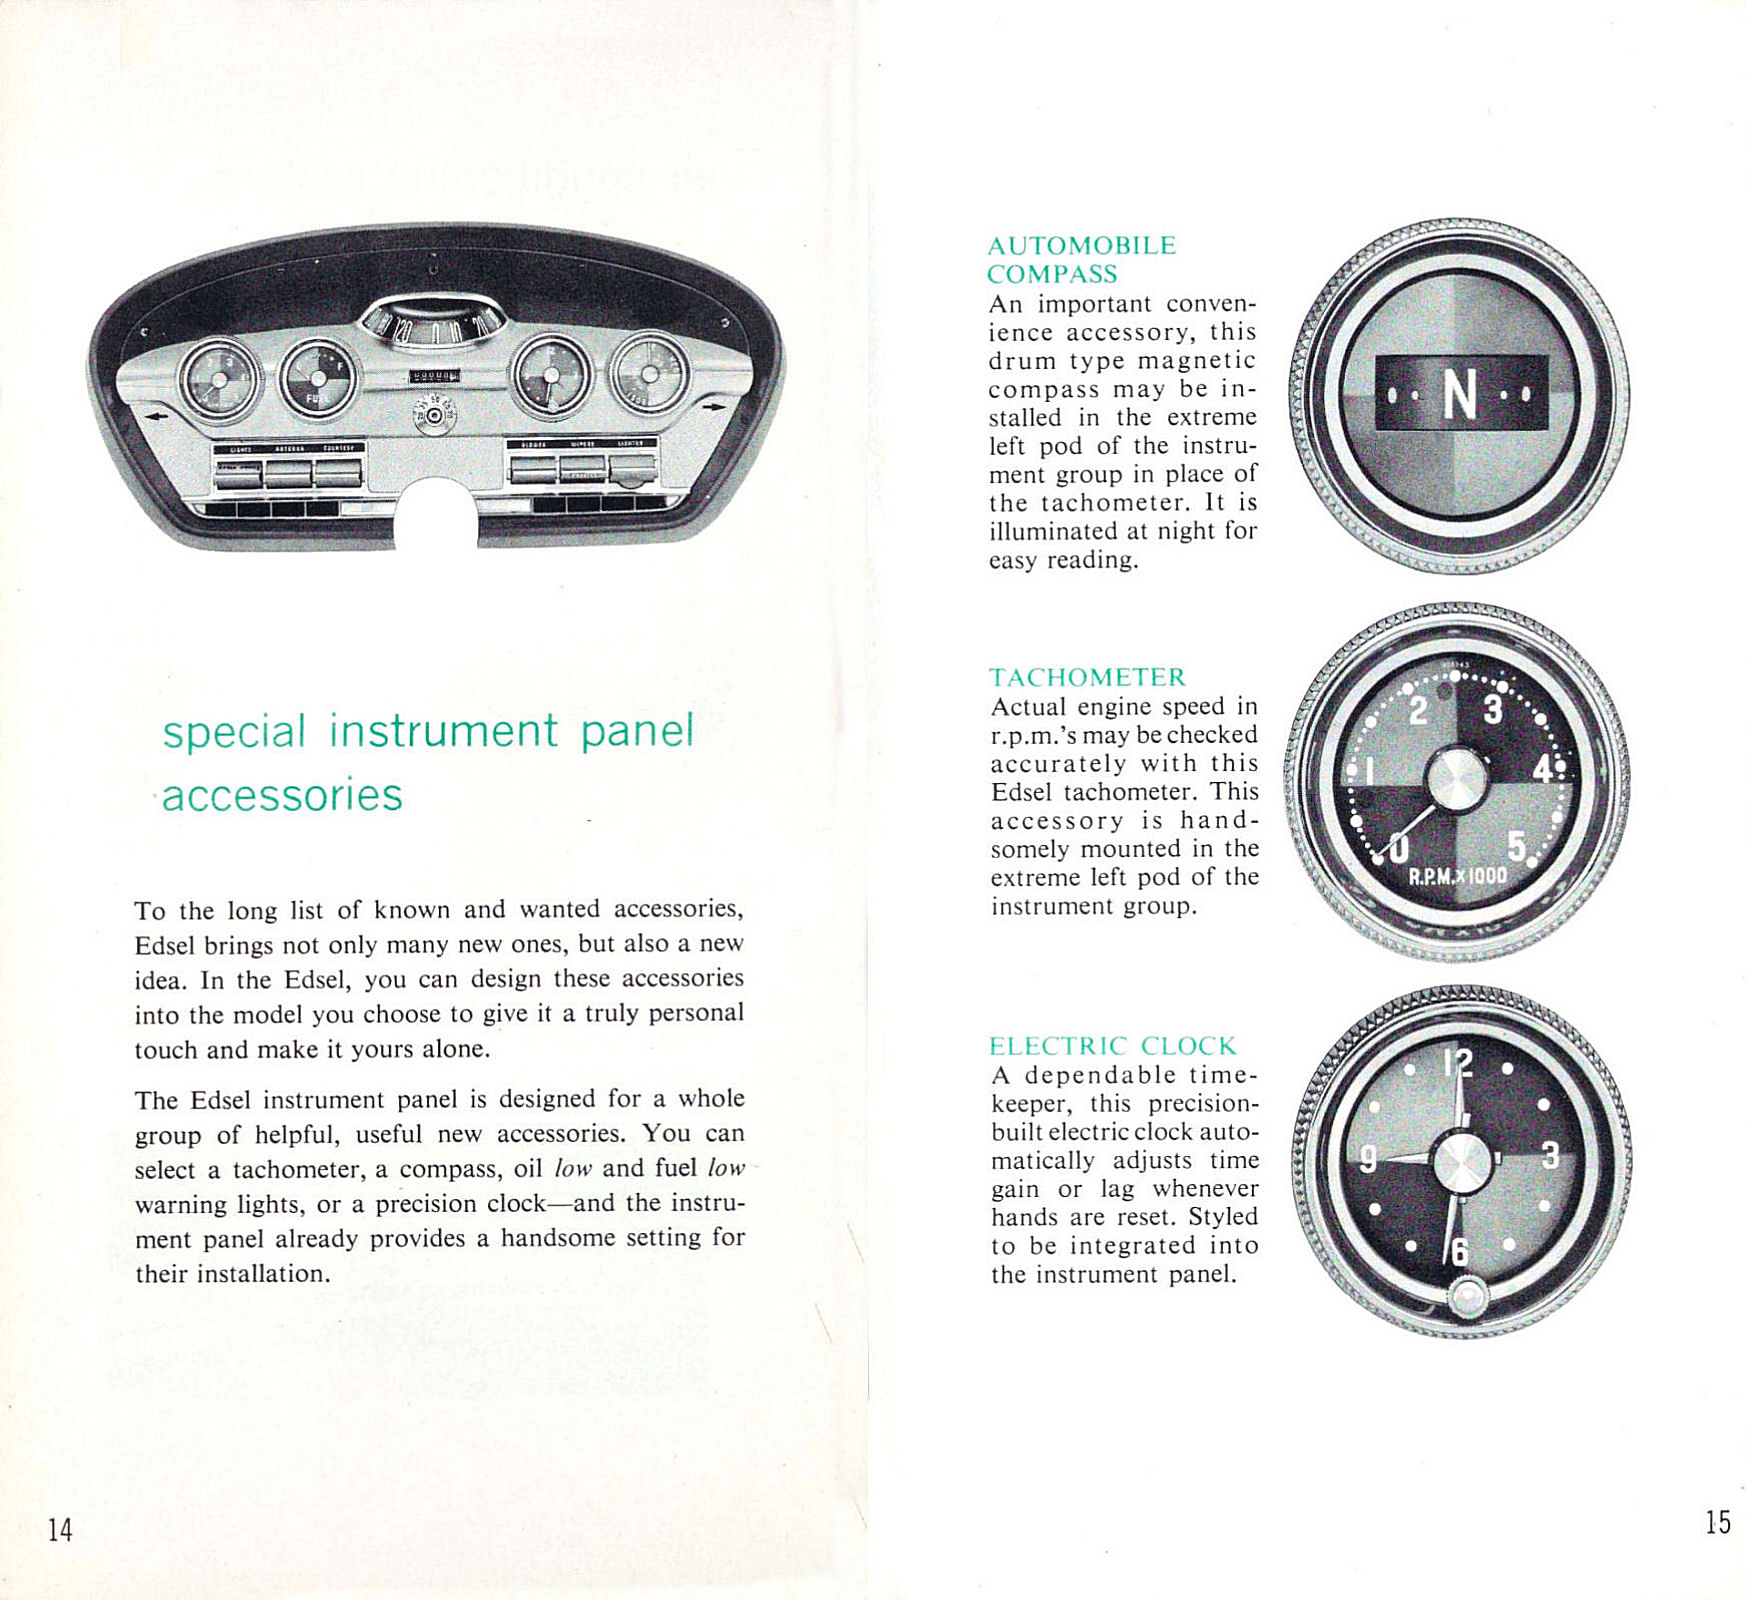 1958 Edsel Accessories-14-15